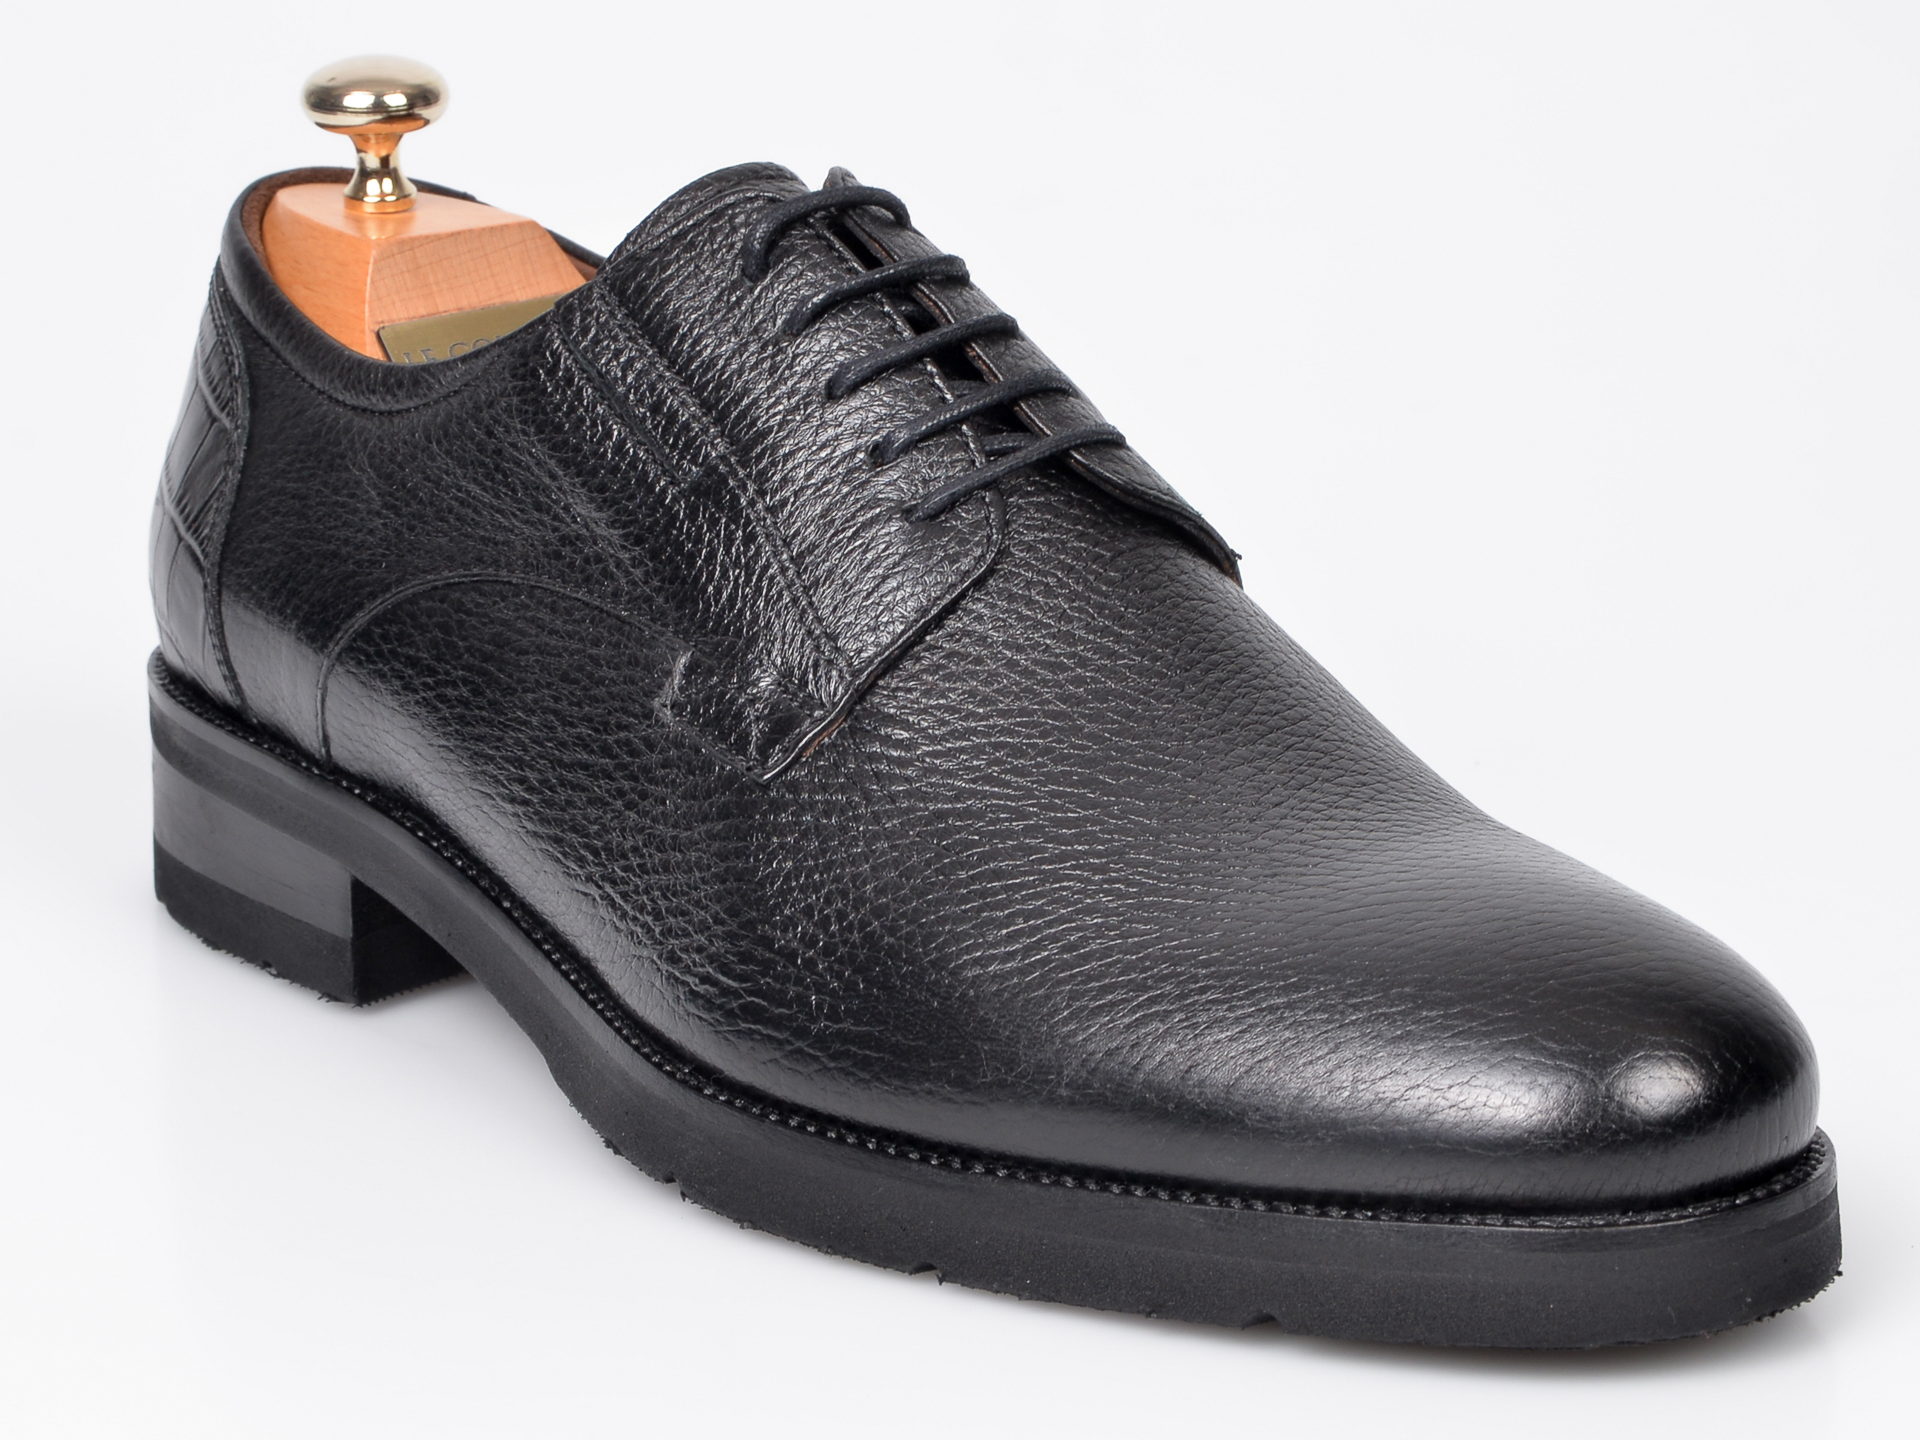 Pantofi LE COLONEL negri, 41276, din piele naturala